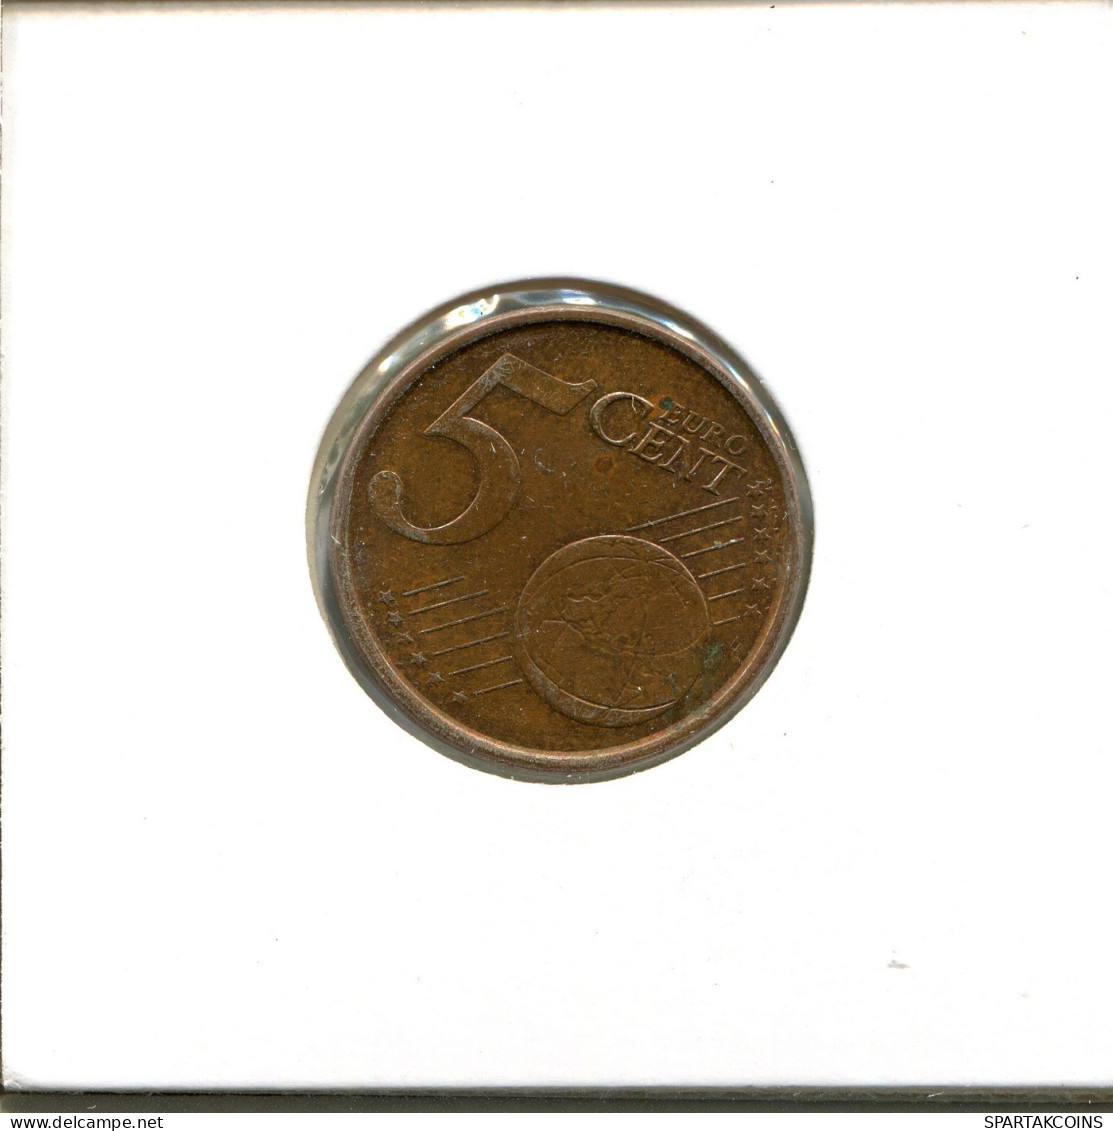 5 EURO CENTS 2004 SPAIN Coin #EU567.U.A - Spanje